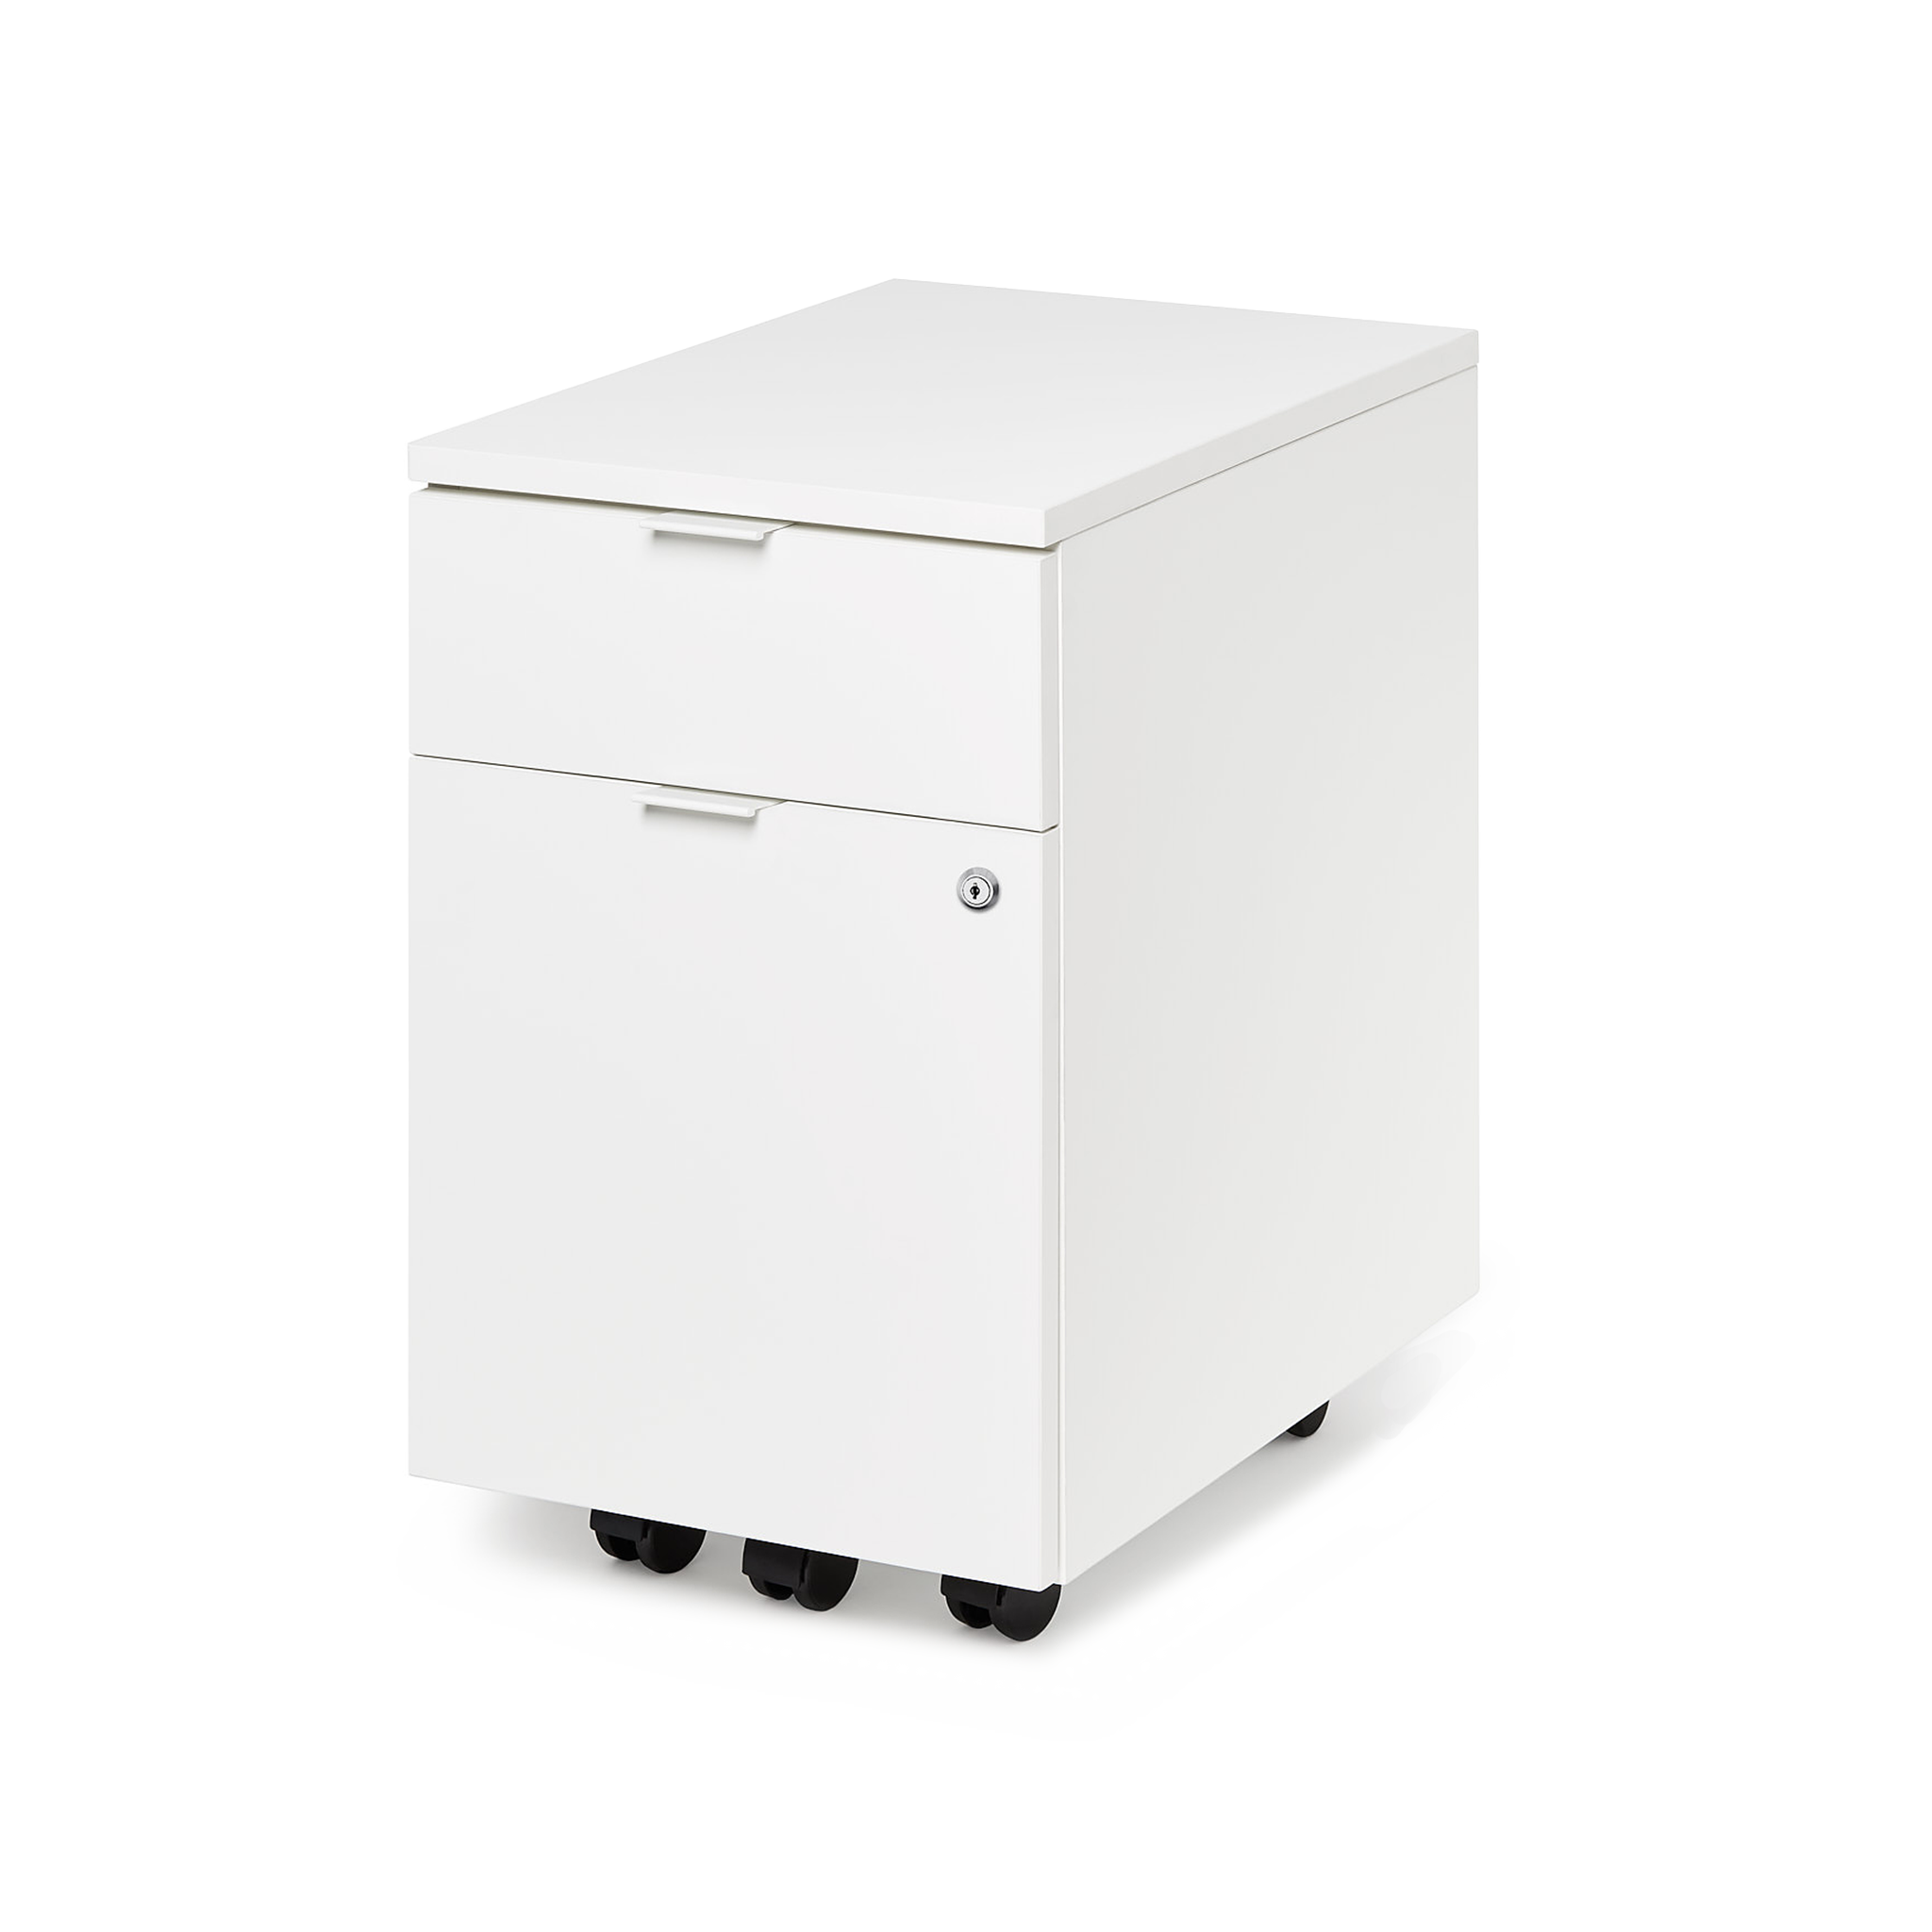 Neat Filing Cabinet - White/White - Blanc/Blanc